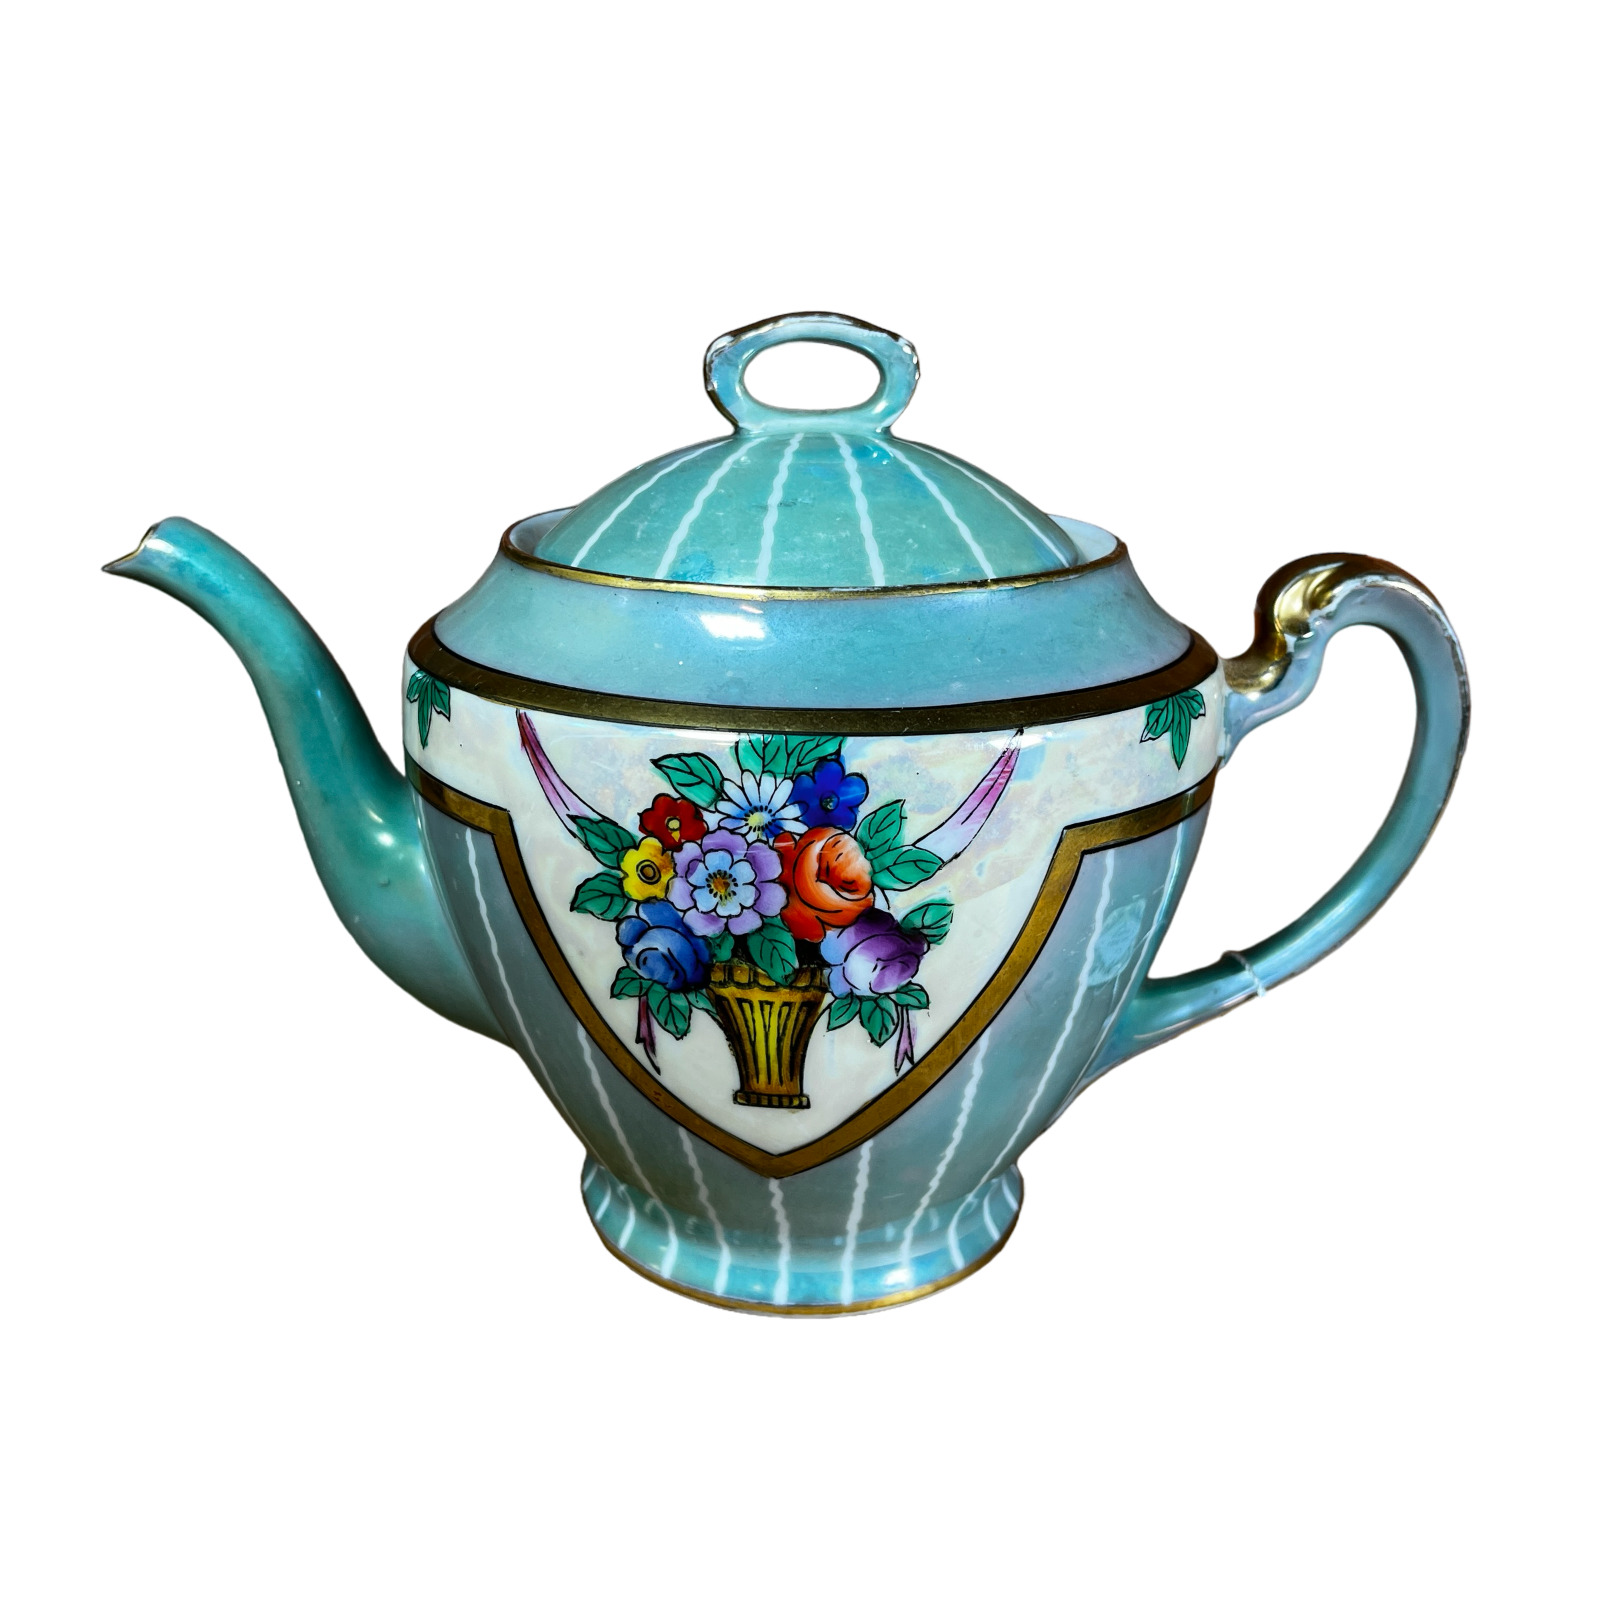 Noritake Morimura Porcelain Teapot Teal Blue & White Lusterware Flowers Japan